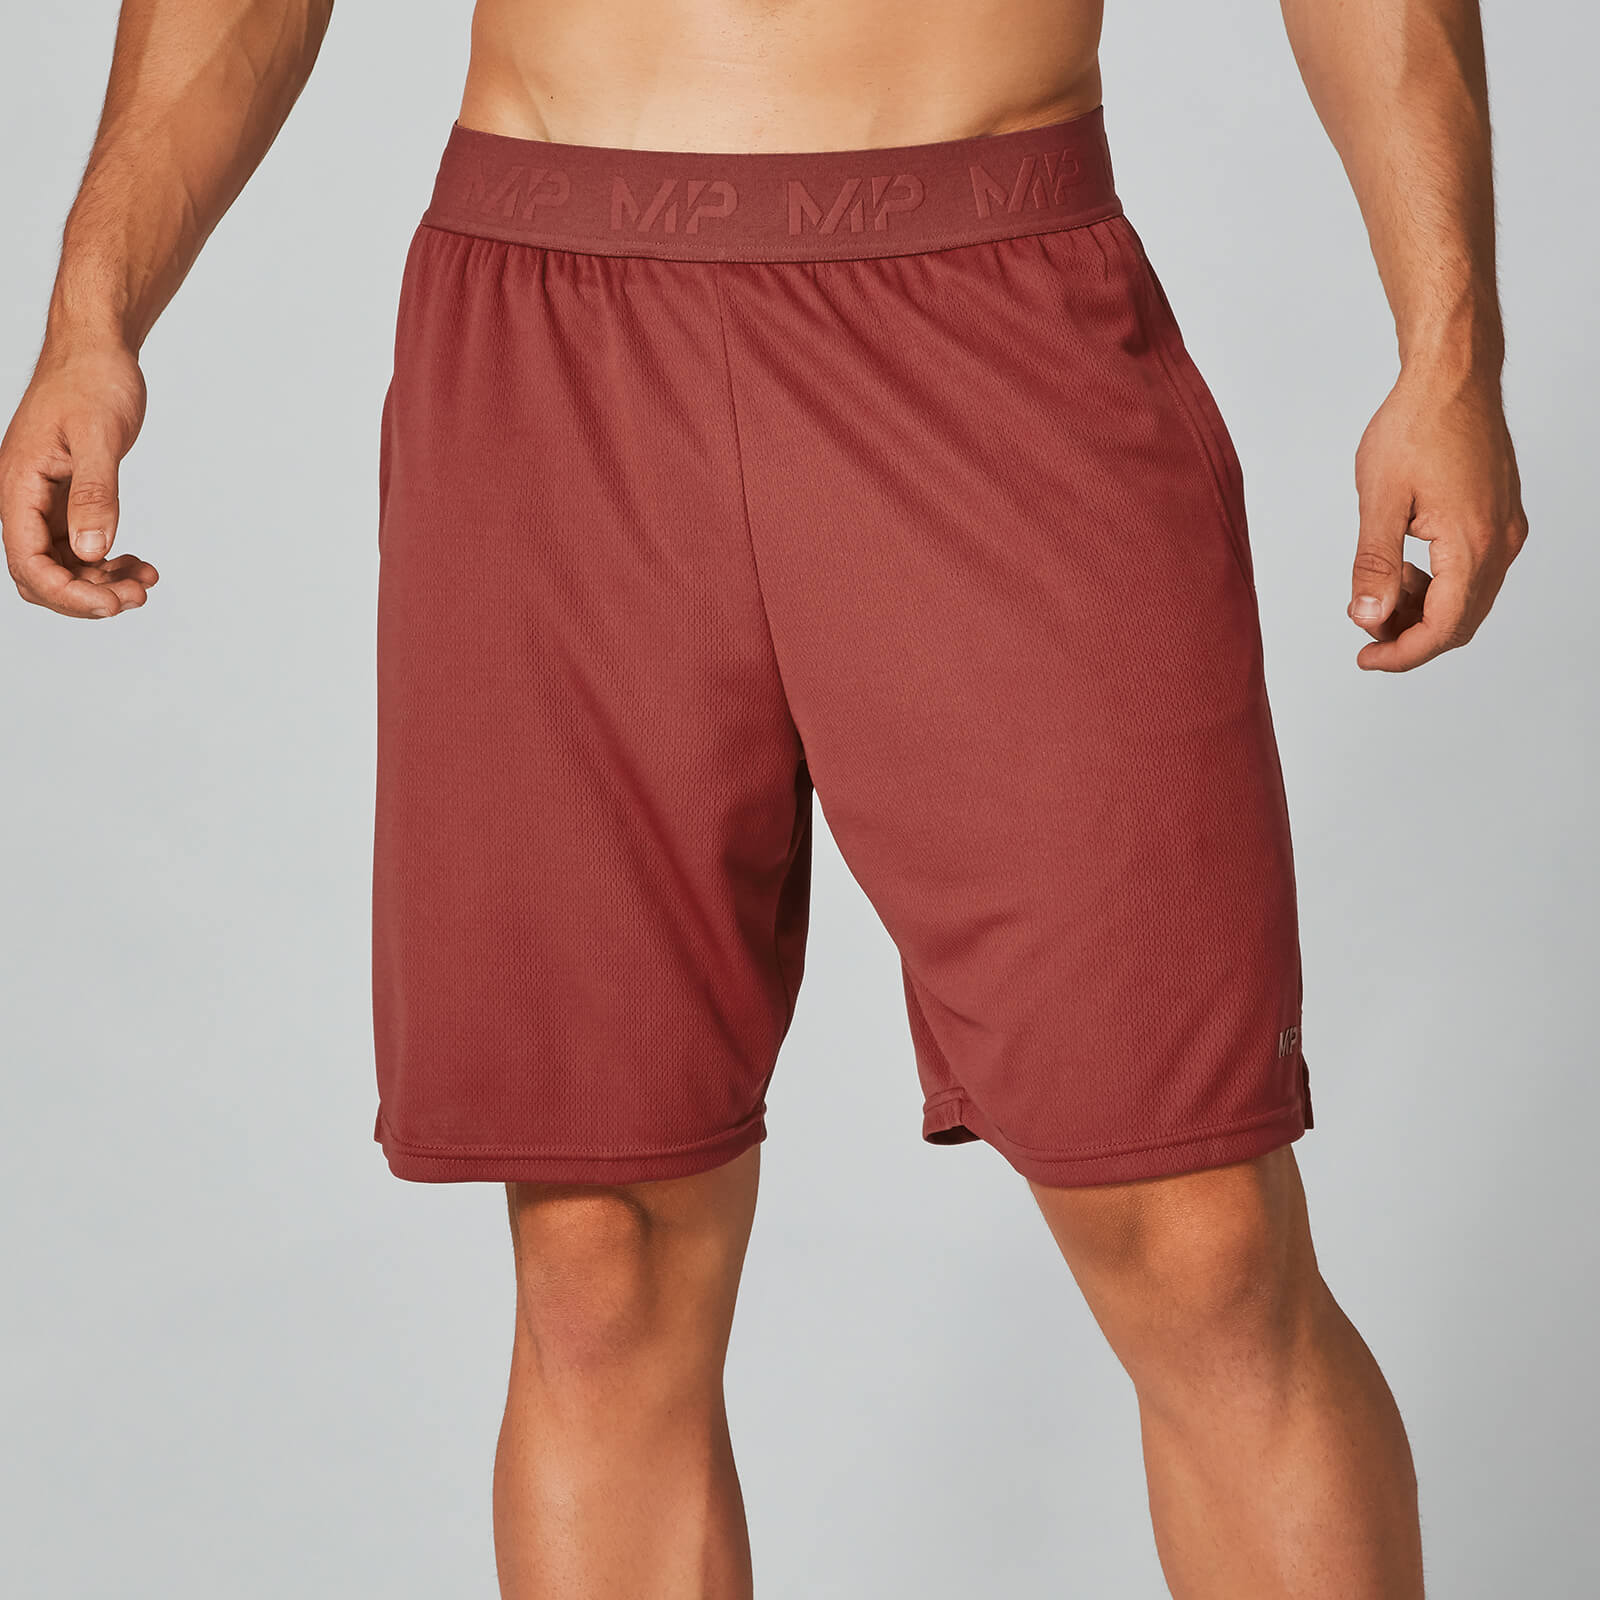 Dry-Tech 速乾系列男士短褲 - 紅褐色 - XS